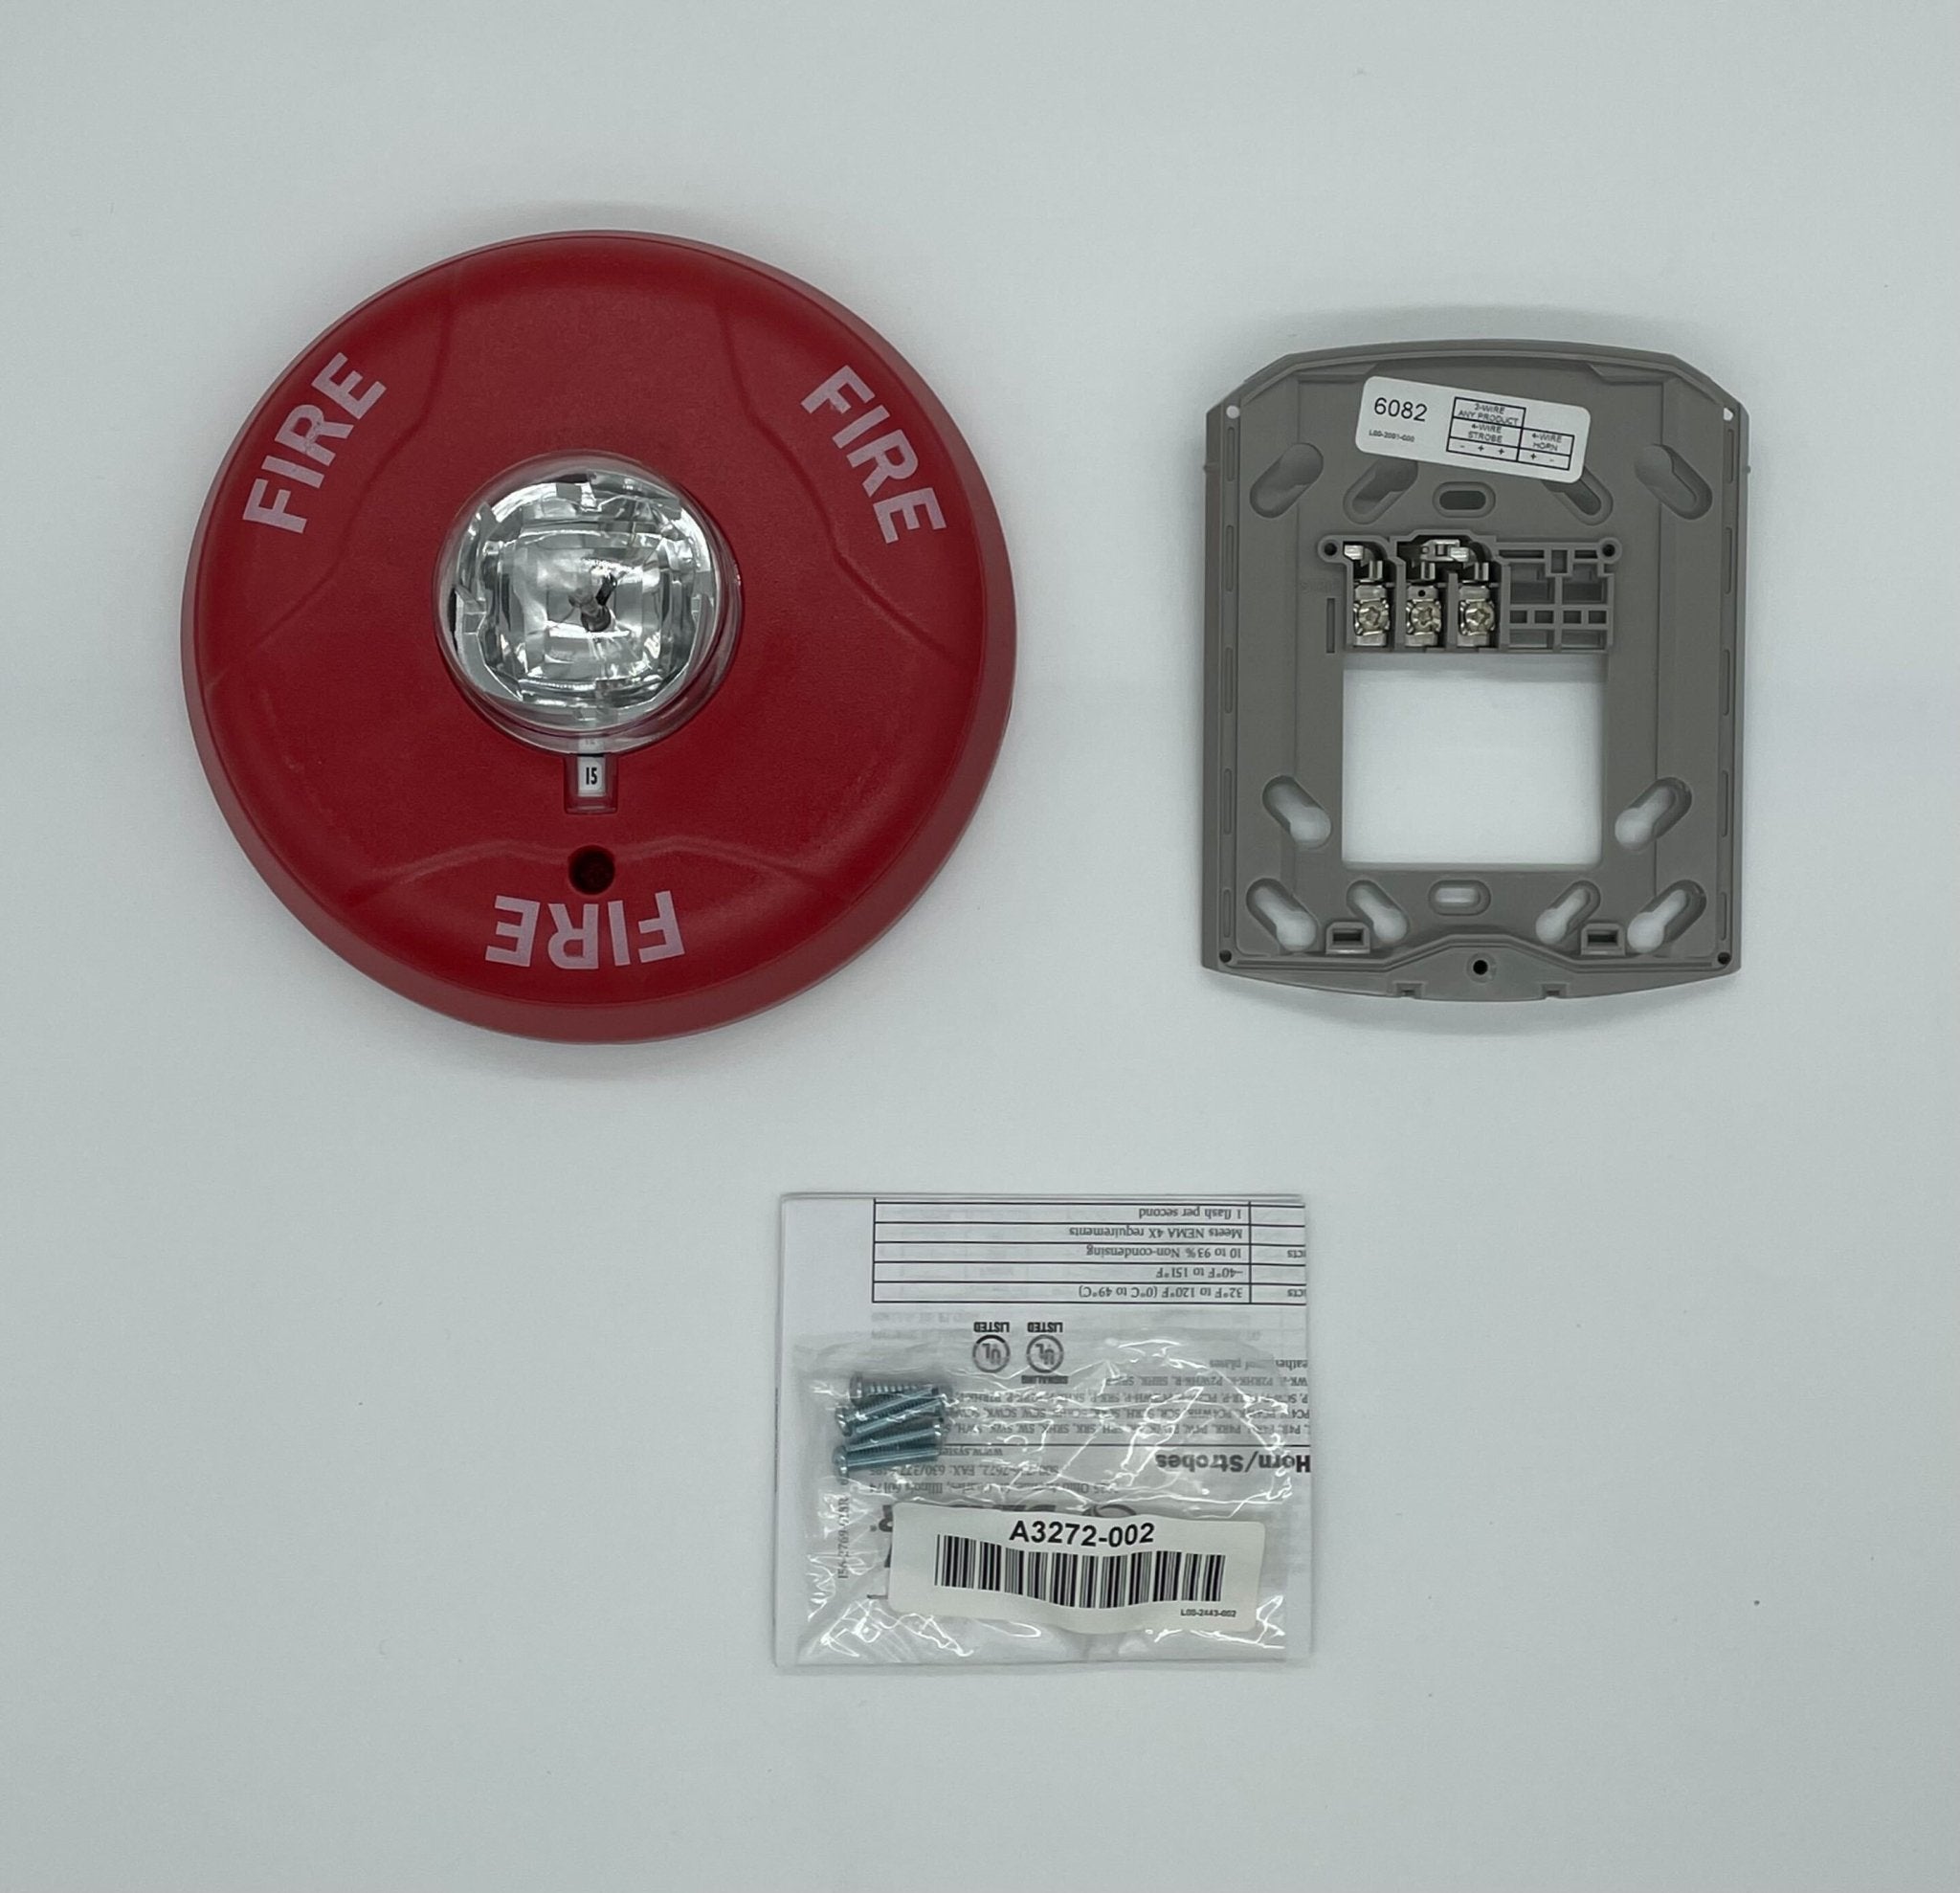 System Sensor SCR - The Fire Alarm Supplier